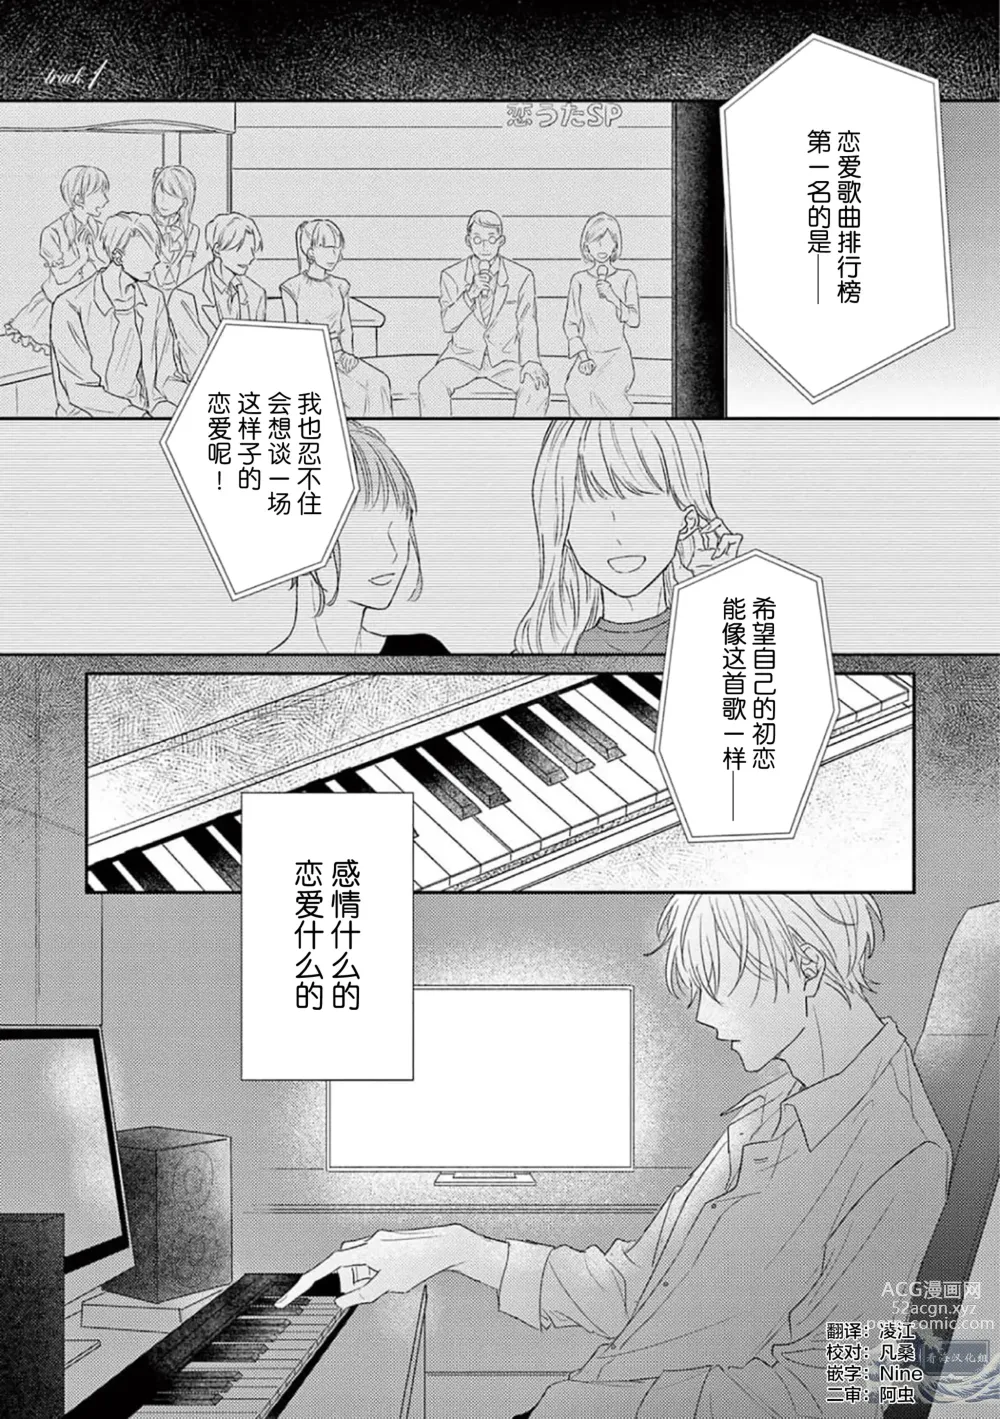 Page 5 of manga 直到这曲恋歌结束为止